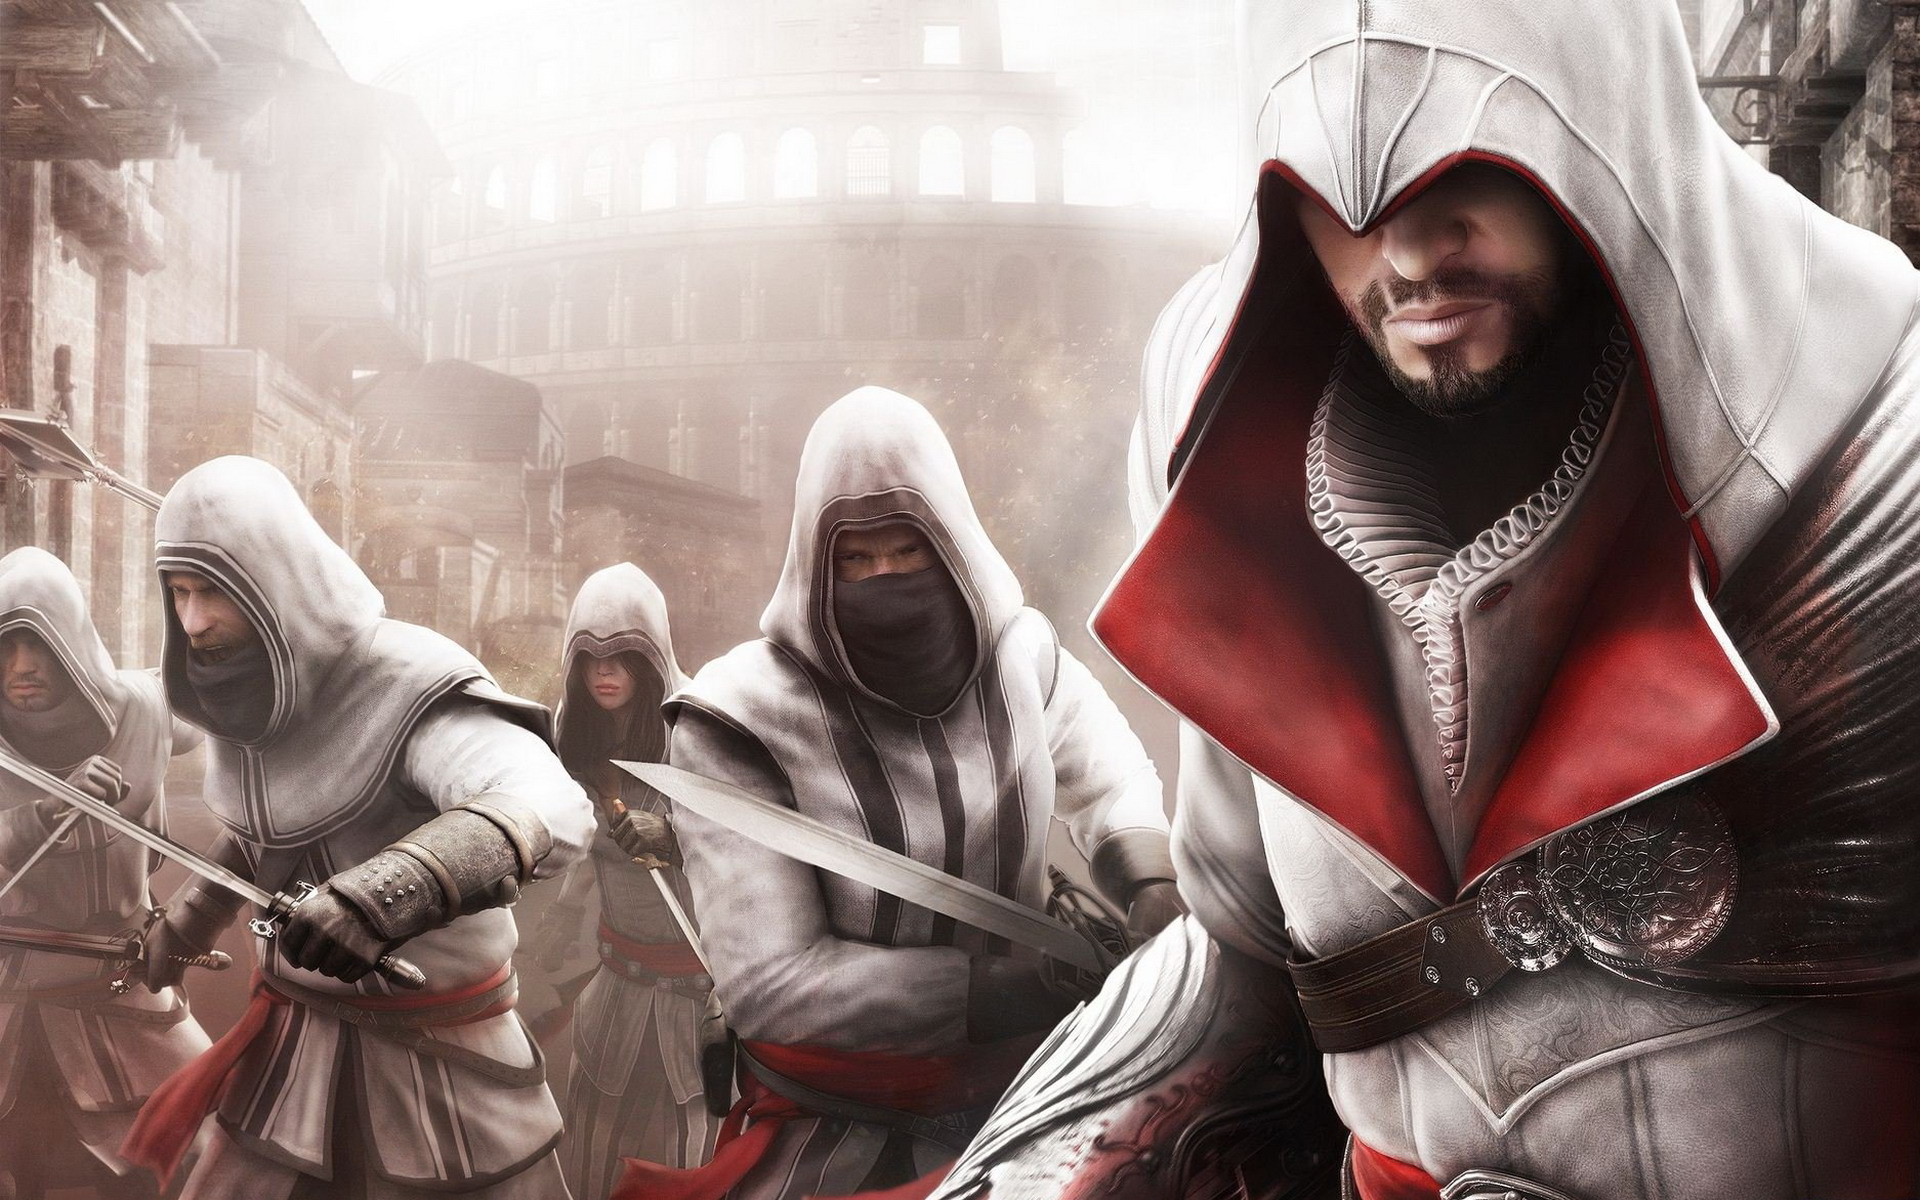 Assassin S Creed Wallpaper HD